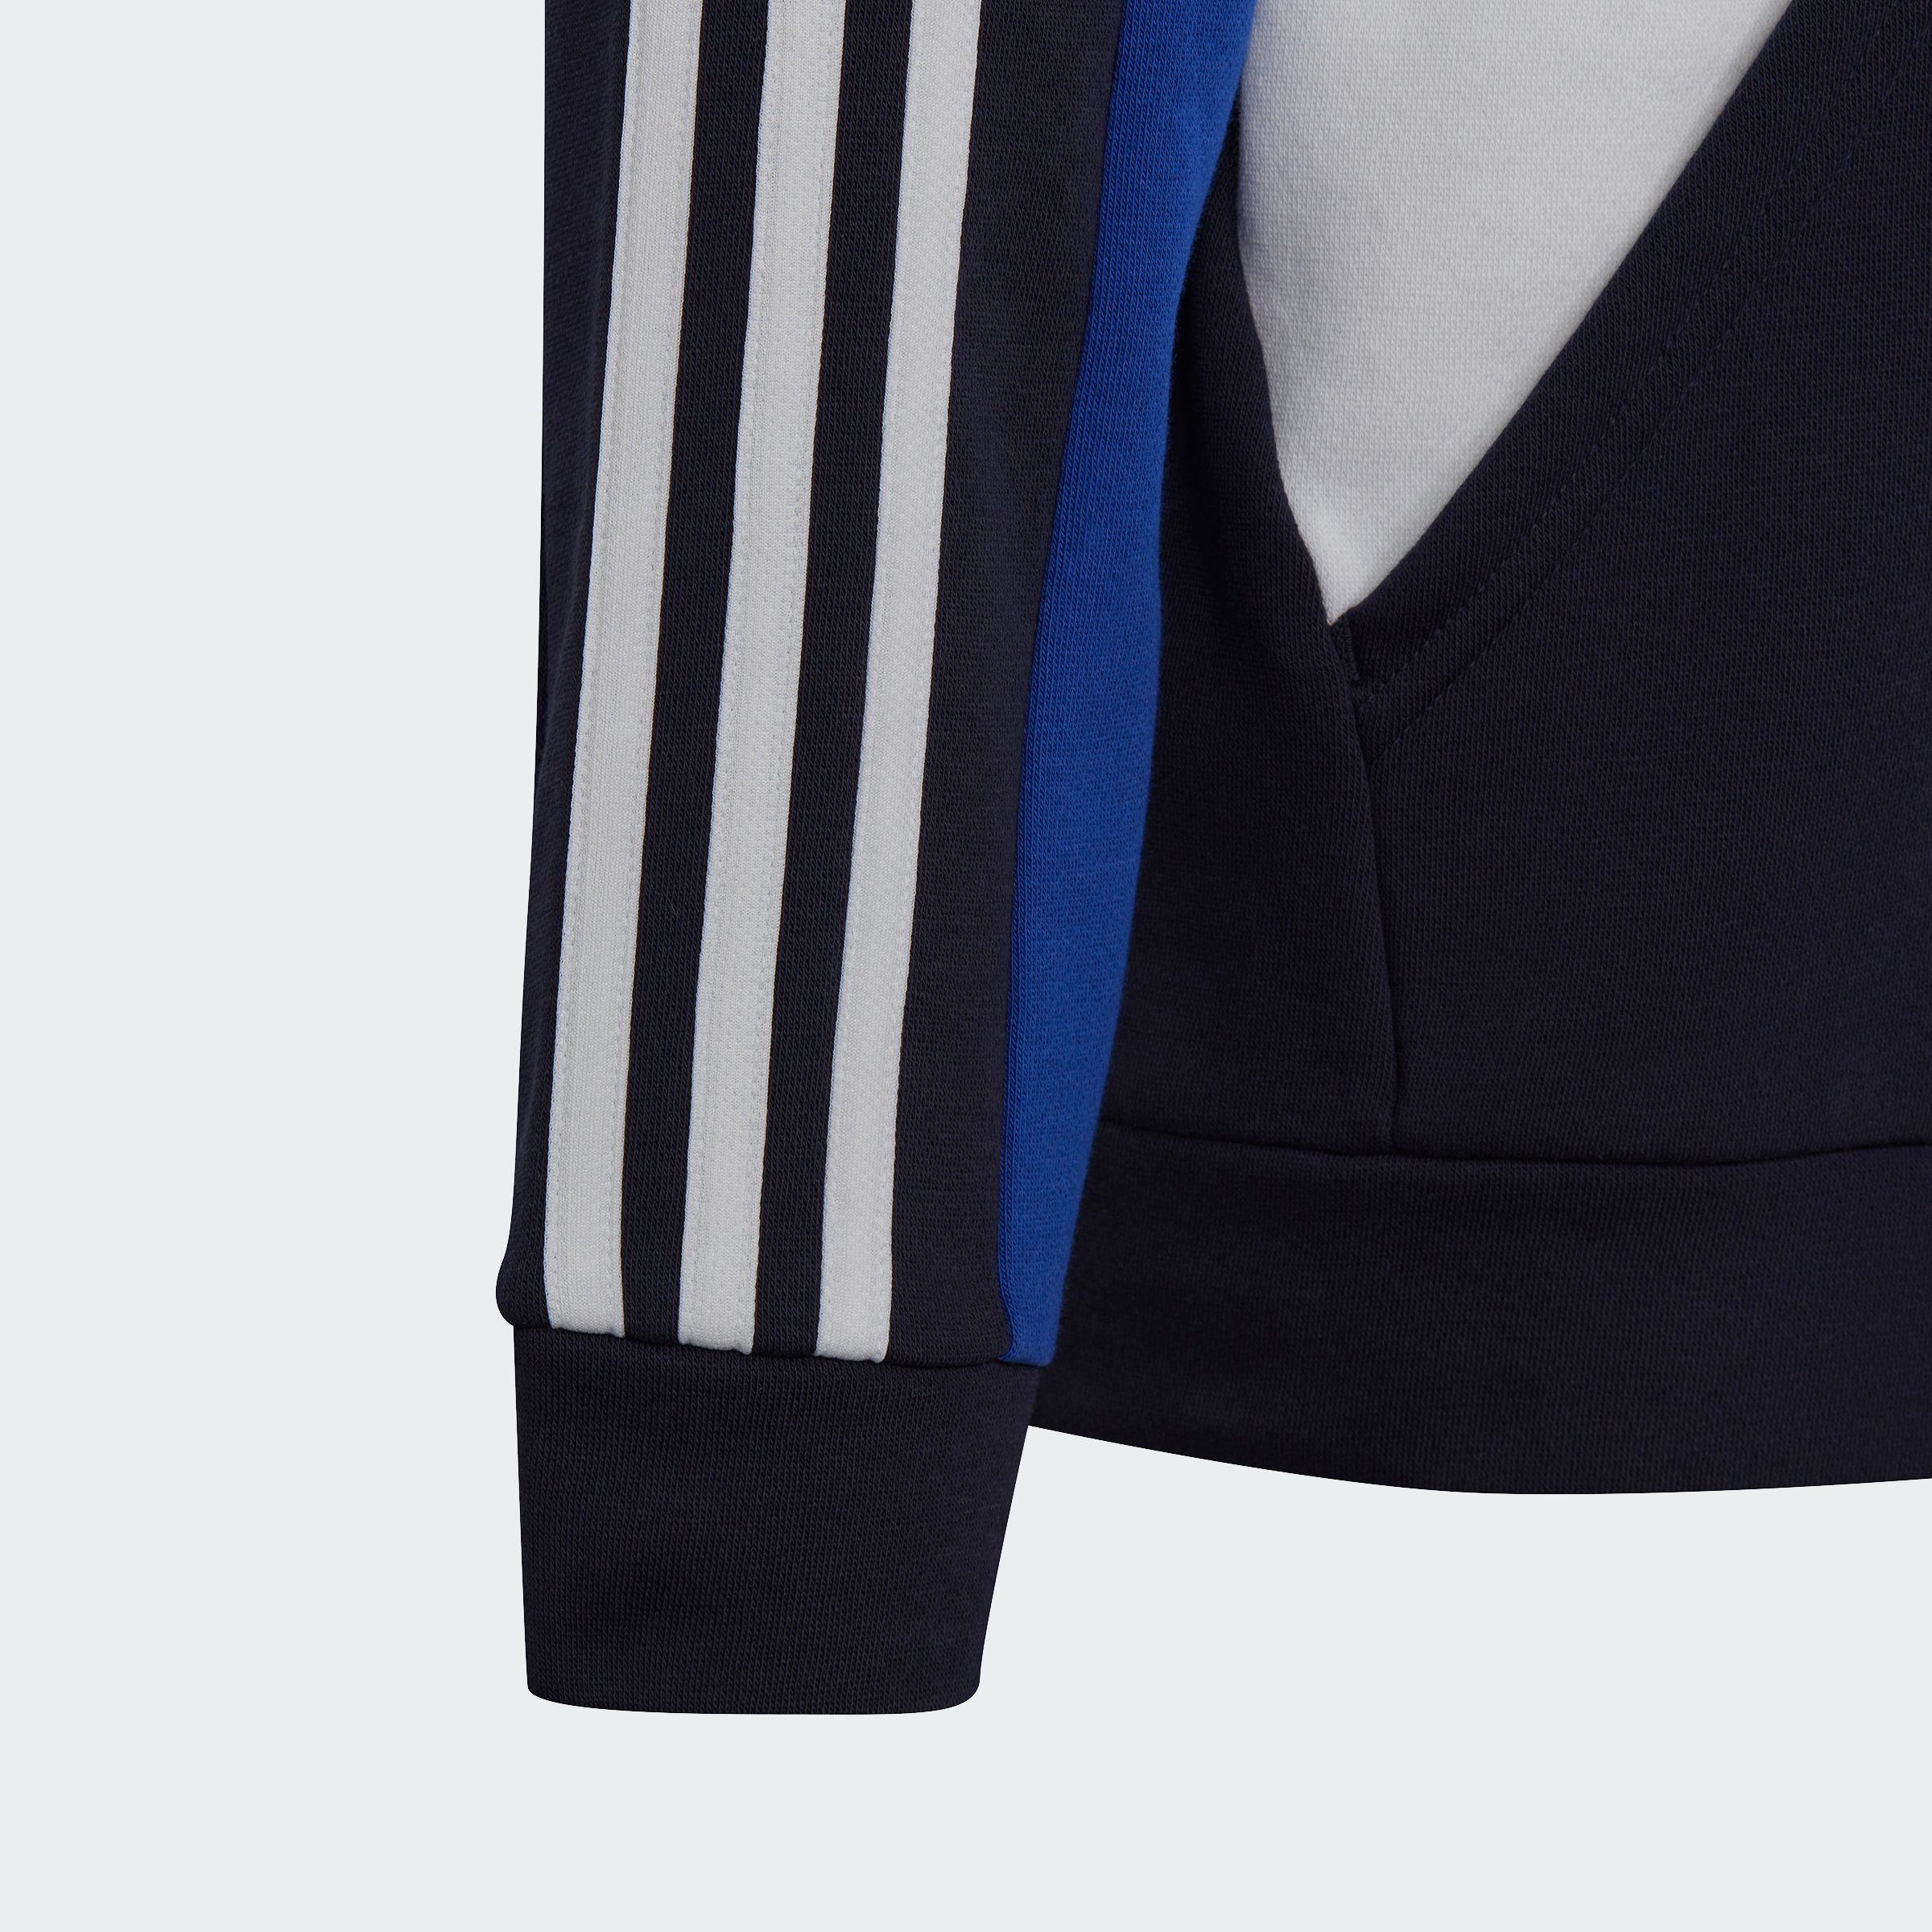 adidas Sportswear Sweatshirt Legend Ink COLORBLOCK Lucid HOODIE Blue / White Semi 3STREIFEN 